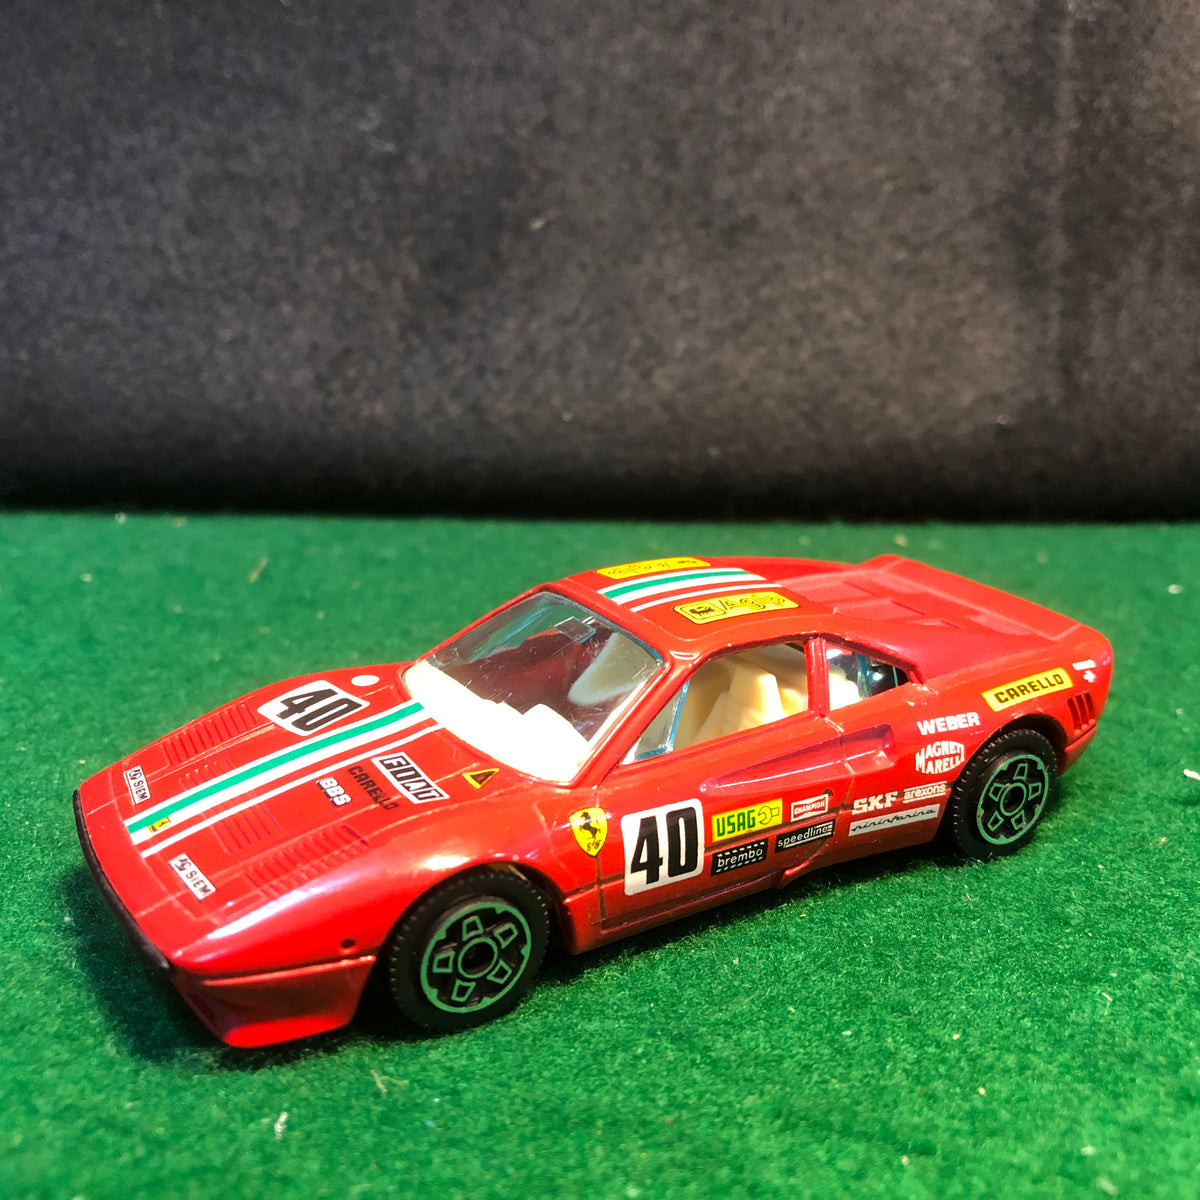 Ferrari 288 GTO Rally N 40 by BBurago 1:43 (4107)(No box)